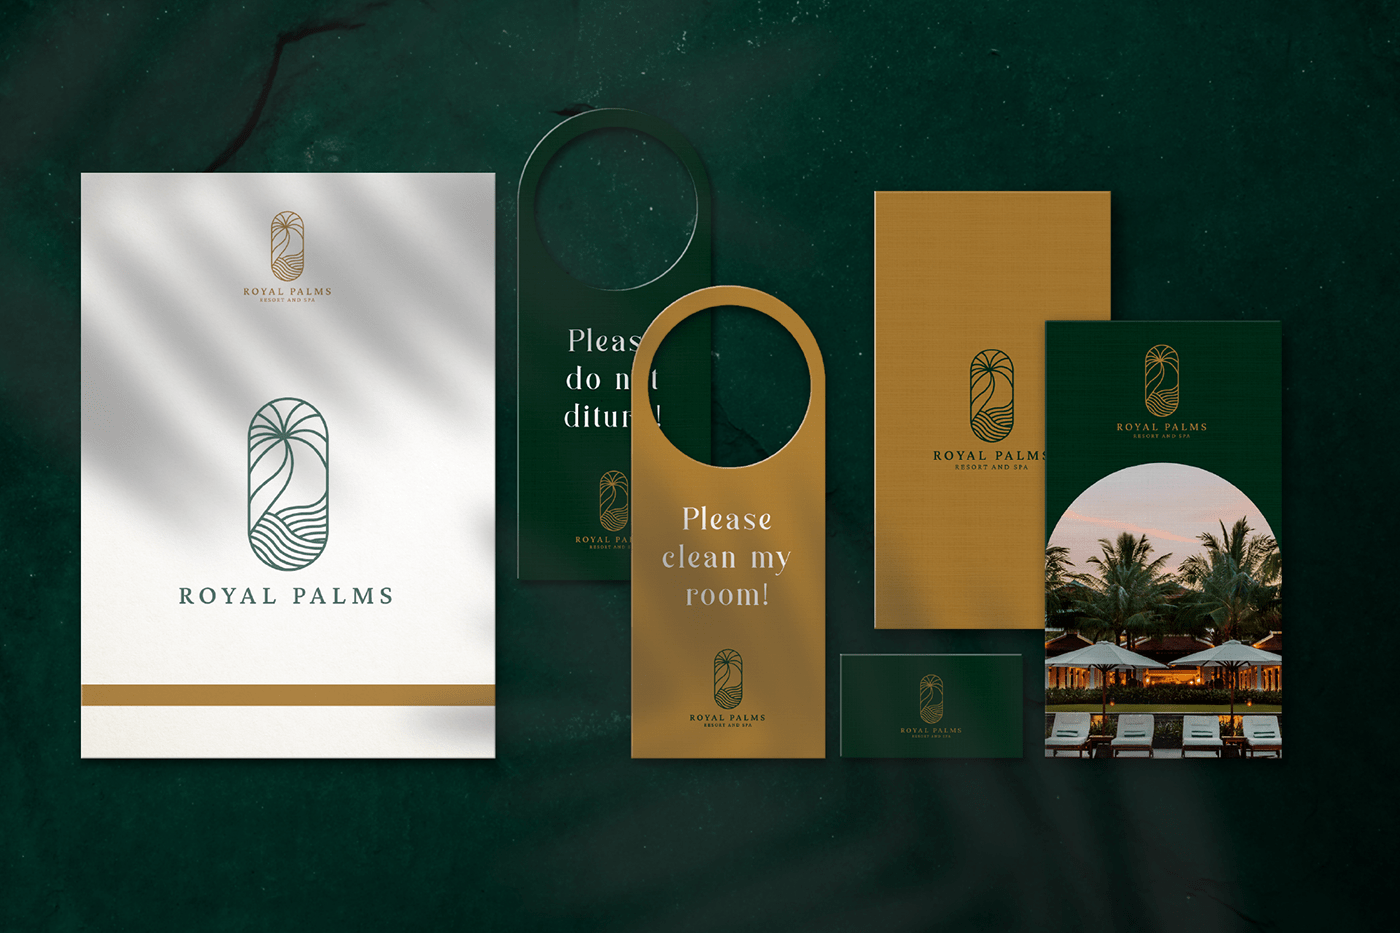 Brand Design brand identity brand identity design Brand identity logo branding  hotel luxury Palm Tree resort Spa